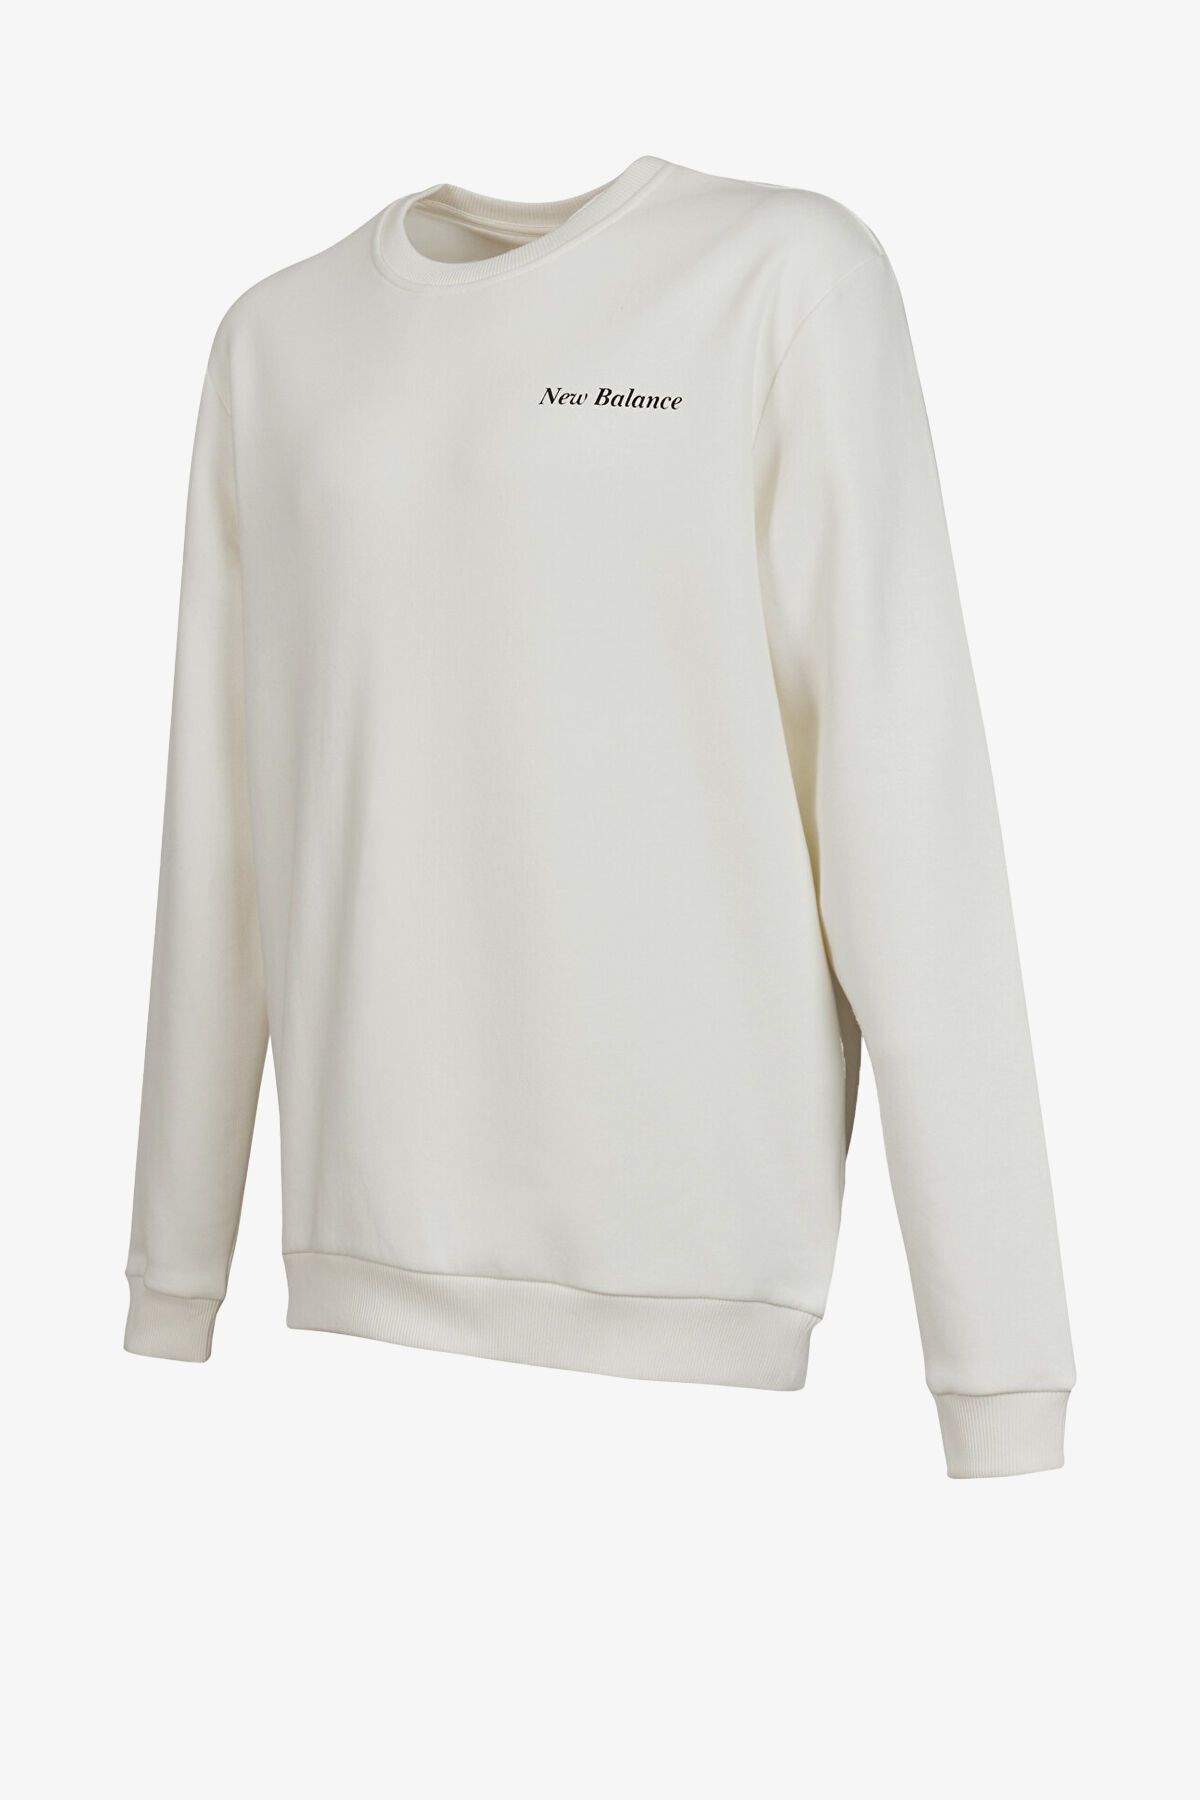 New Balance Lifestyle Erkek Beyaz Sweatshirt MNC3328-SST